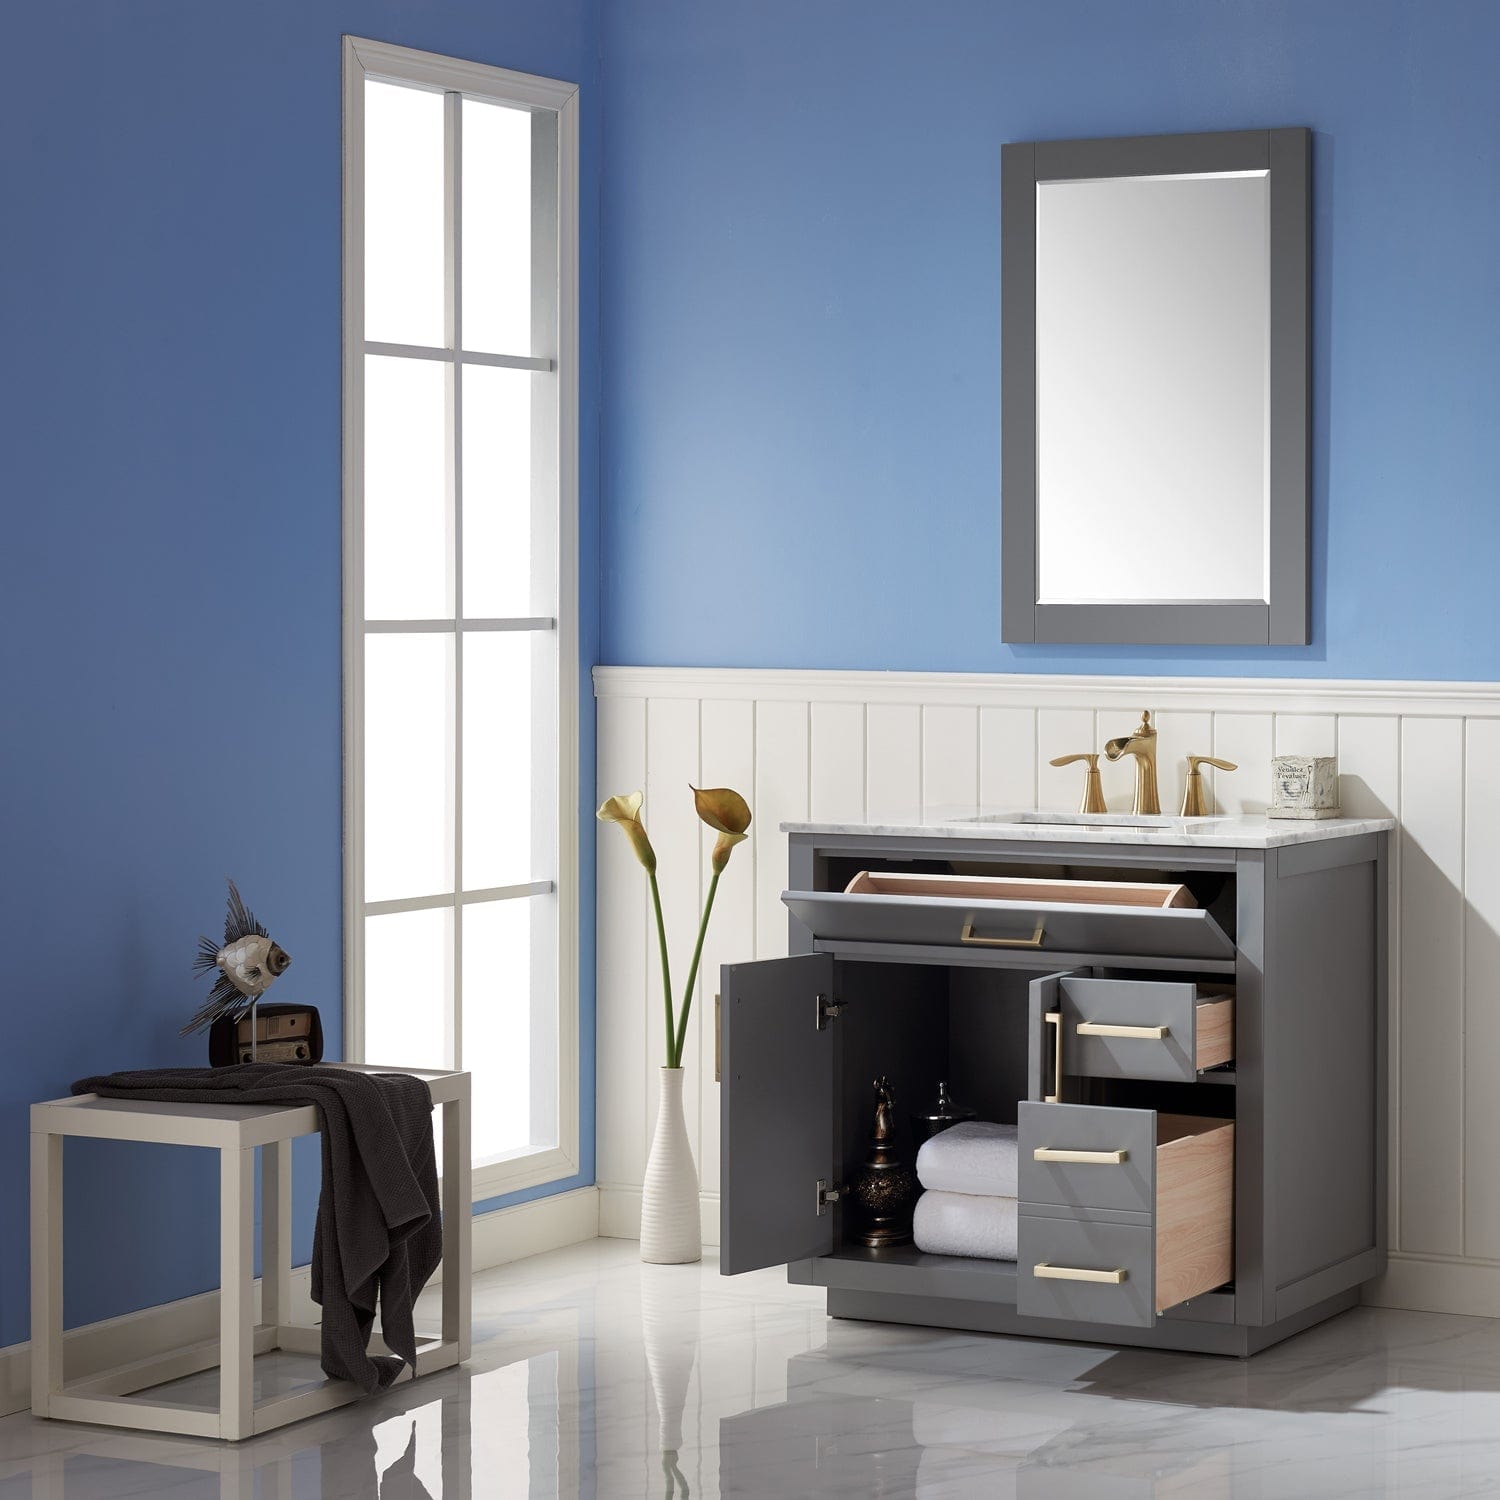 Altair Ivy 36" Single Bathroom Vanity Set in Gray and Carrara White Marble Countertop with Mirror 531036-GR-CA - Molaix631112971096Vanity531036-GR-CA